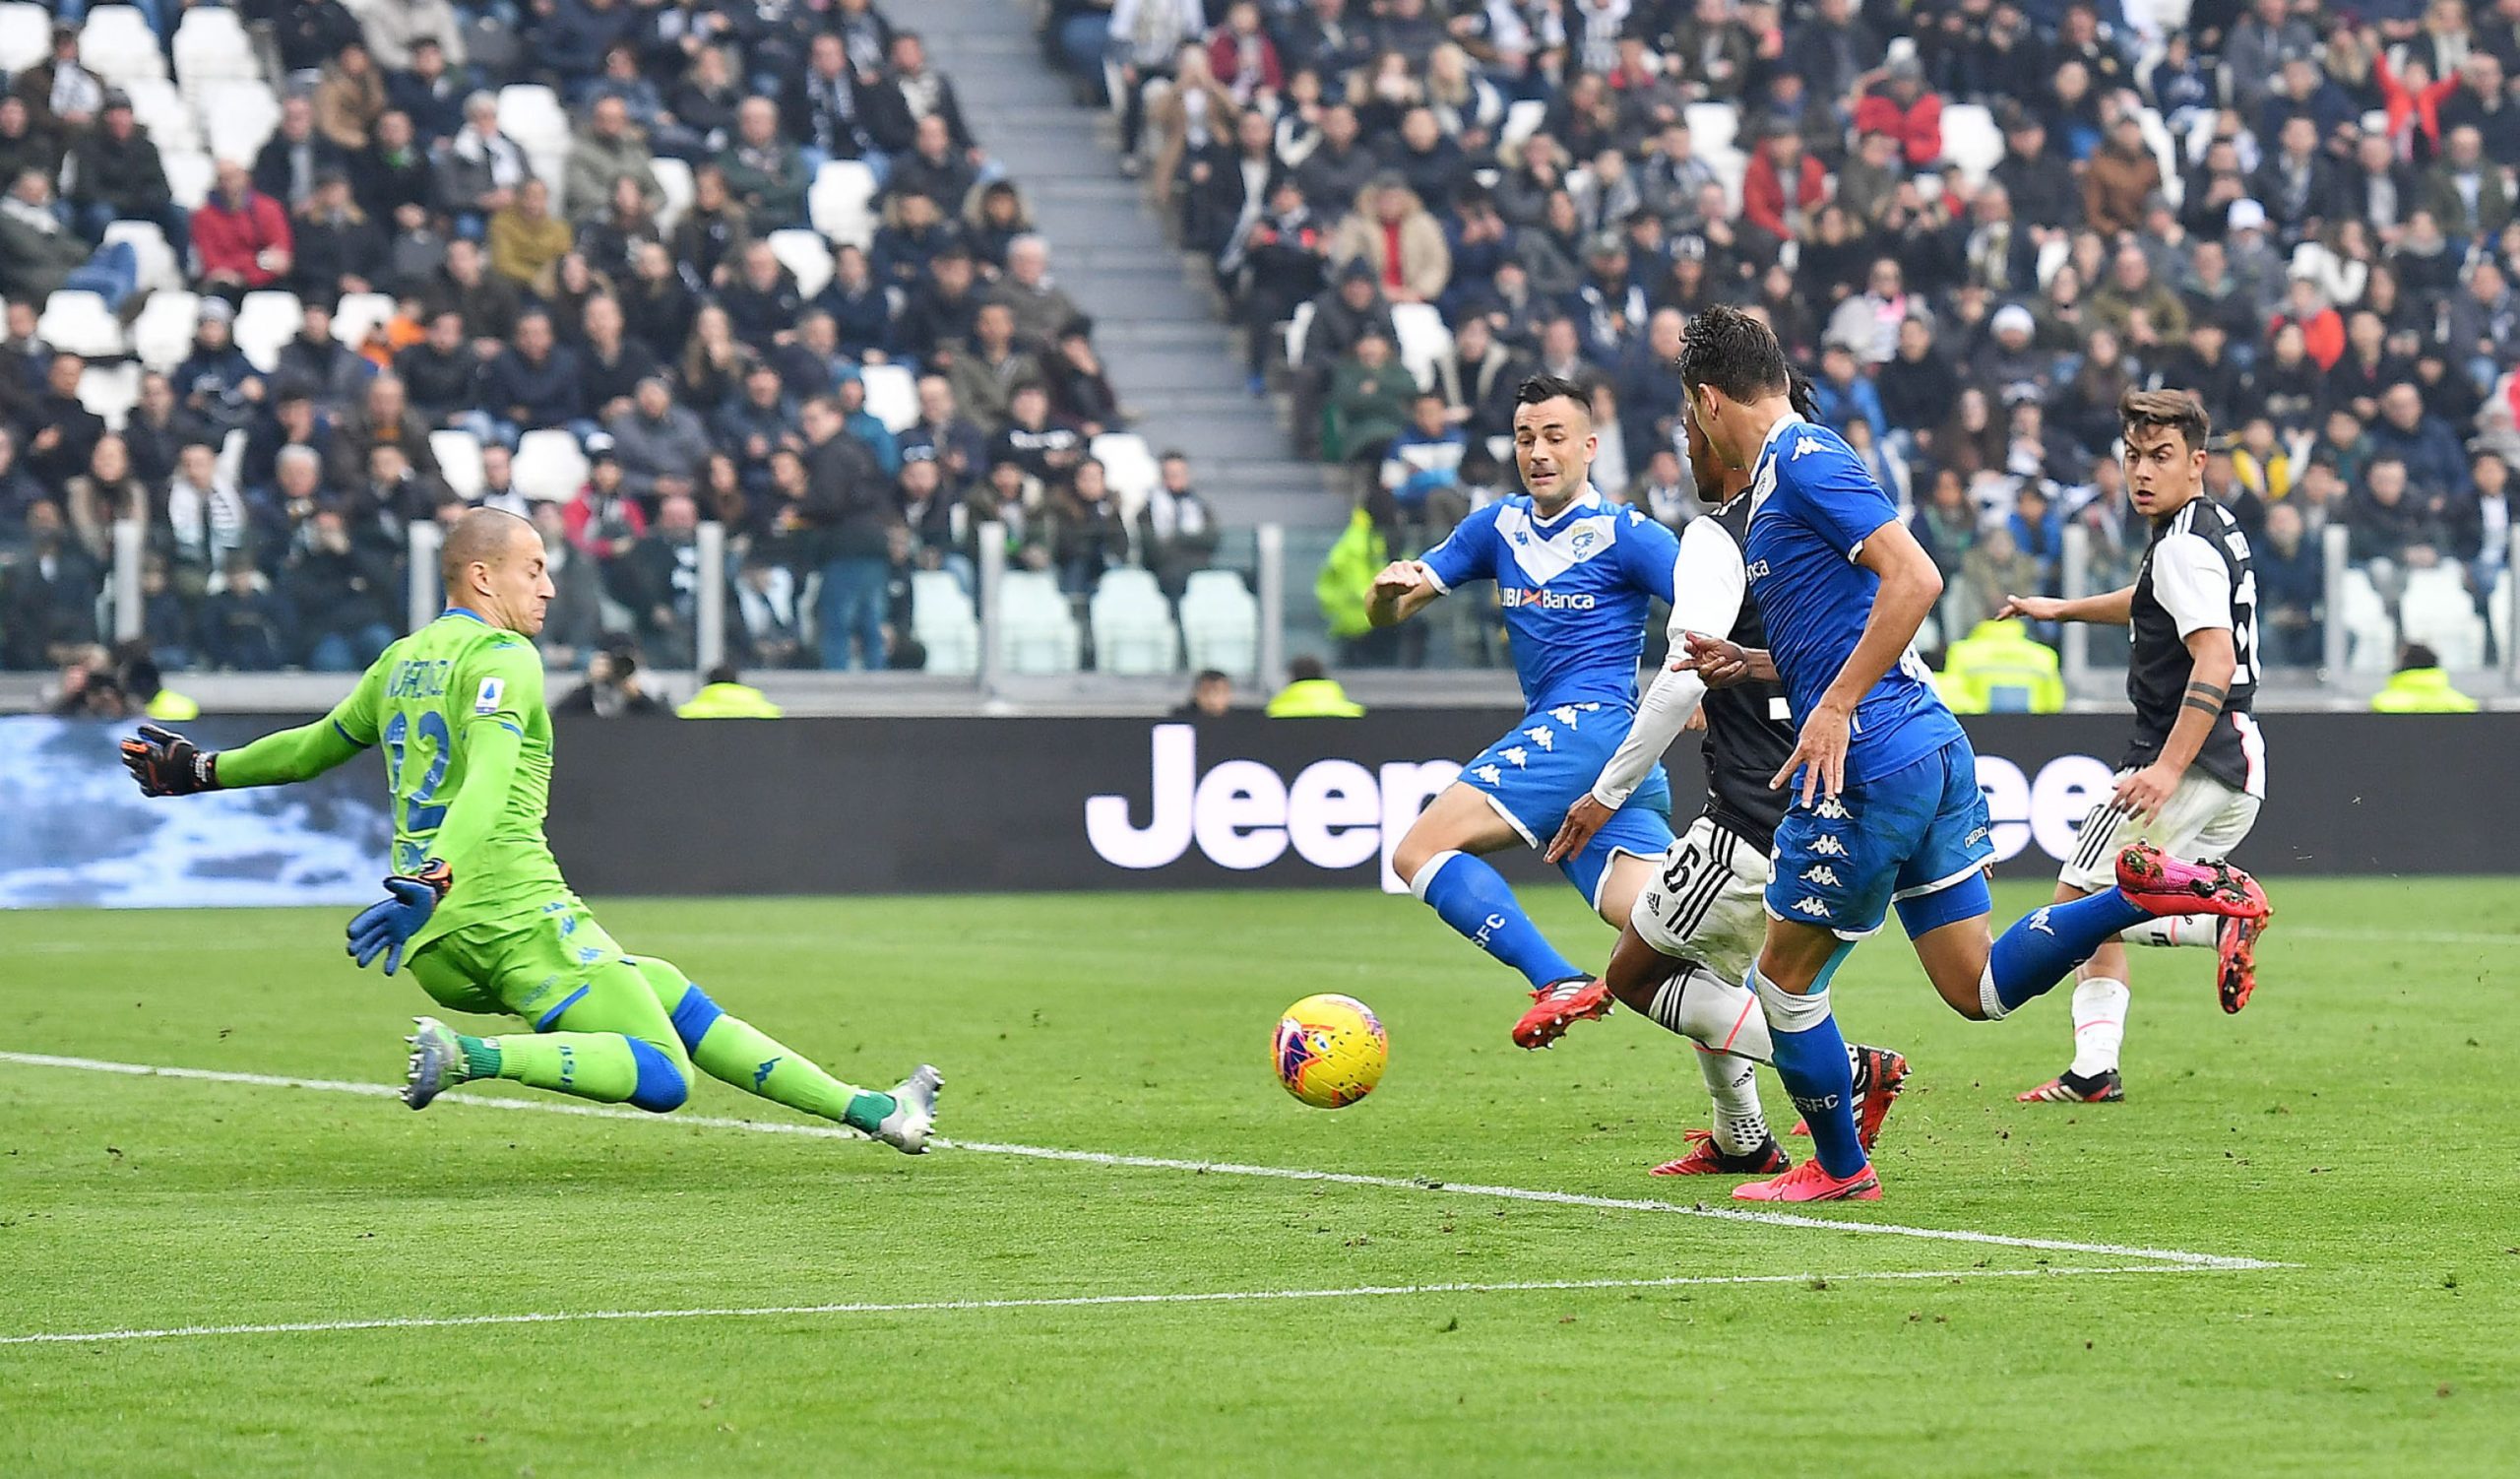 epa08222353 Juventus’ Juan Cuadrado (C) scores during the Italian Serie A soccer match Juventus FC vs Brescia Calcio at the Allianz stadium in Turin, Italy, 16 February 2020.  EPA/ALESSANDRO DI MARCO